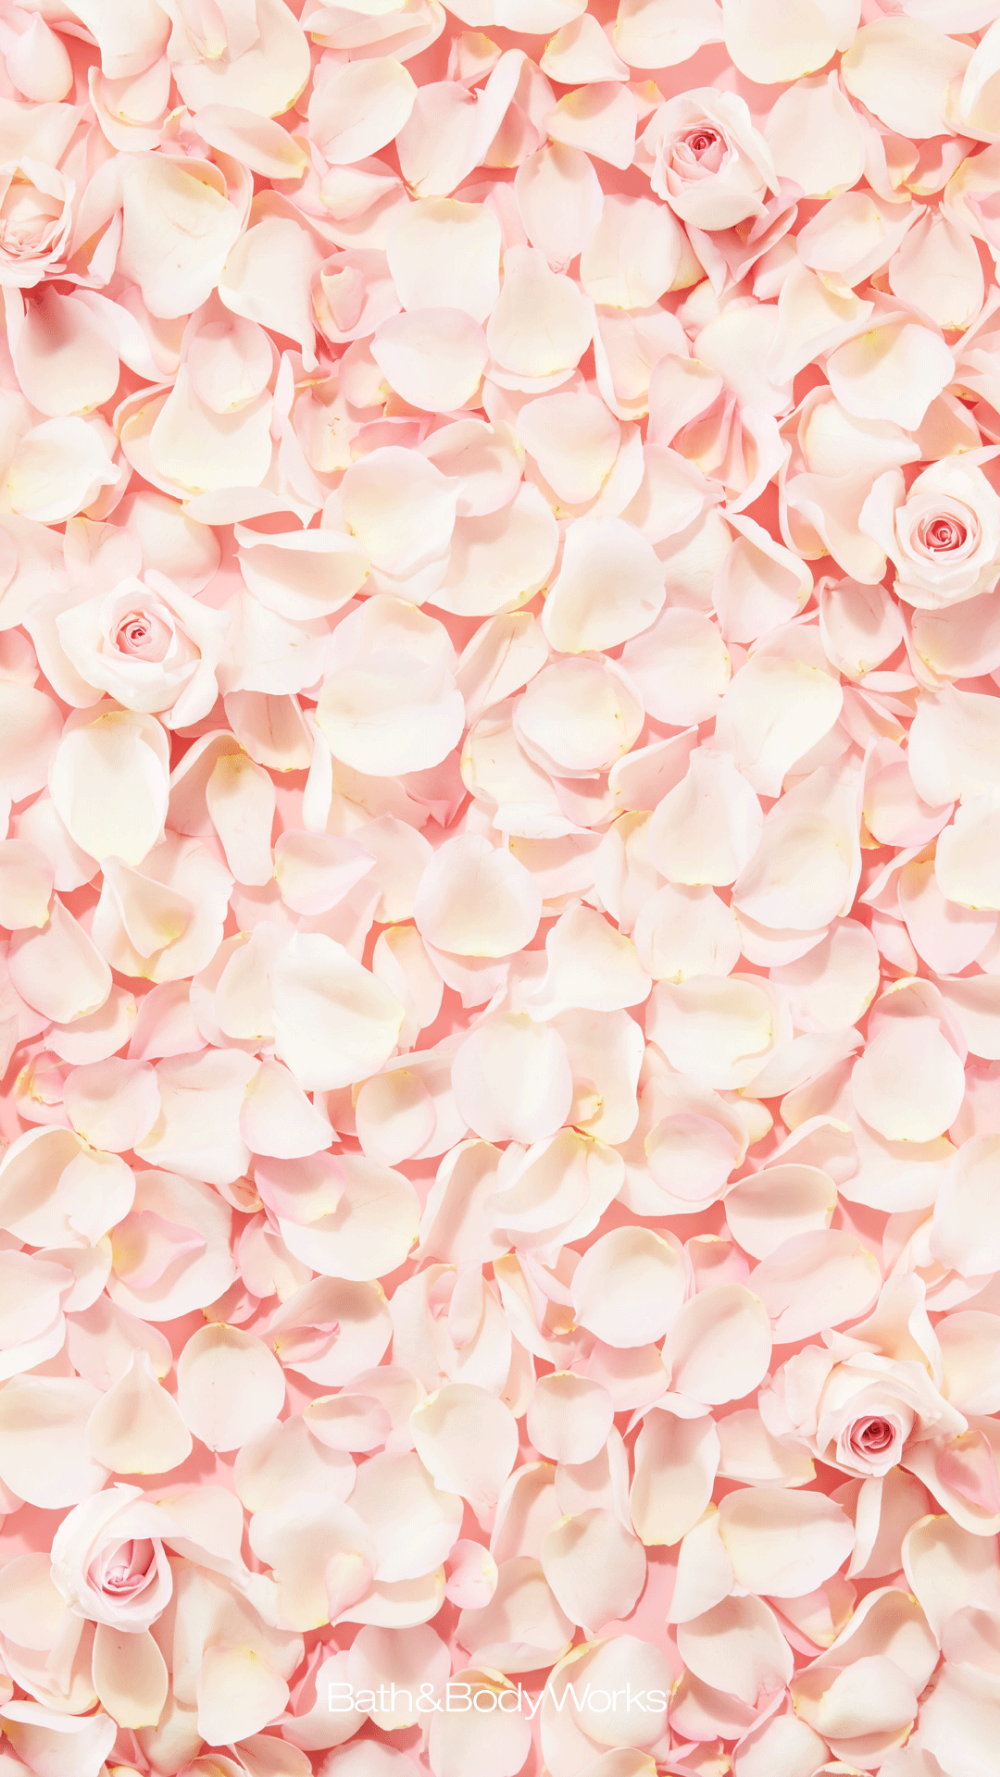 Rose Petals iPhone Wallpaper Background. Teal wallpaper iphone, Color wallpaper iphone, Teal flower wallpaper